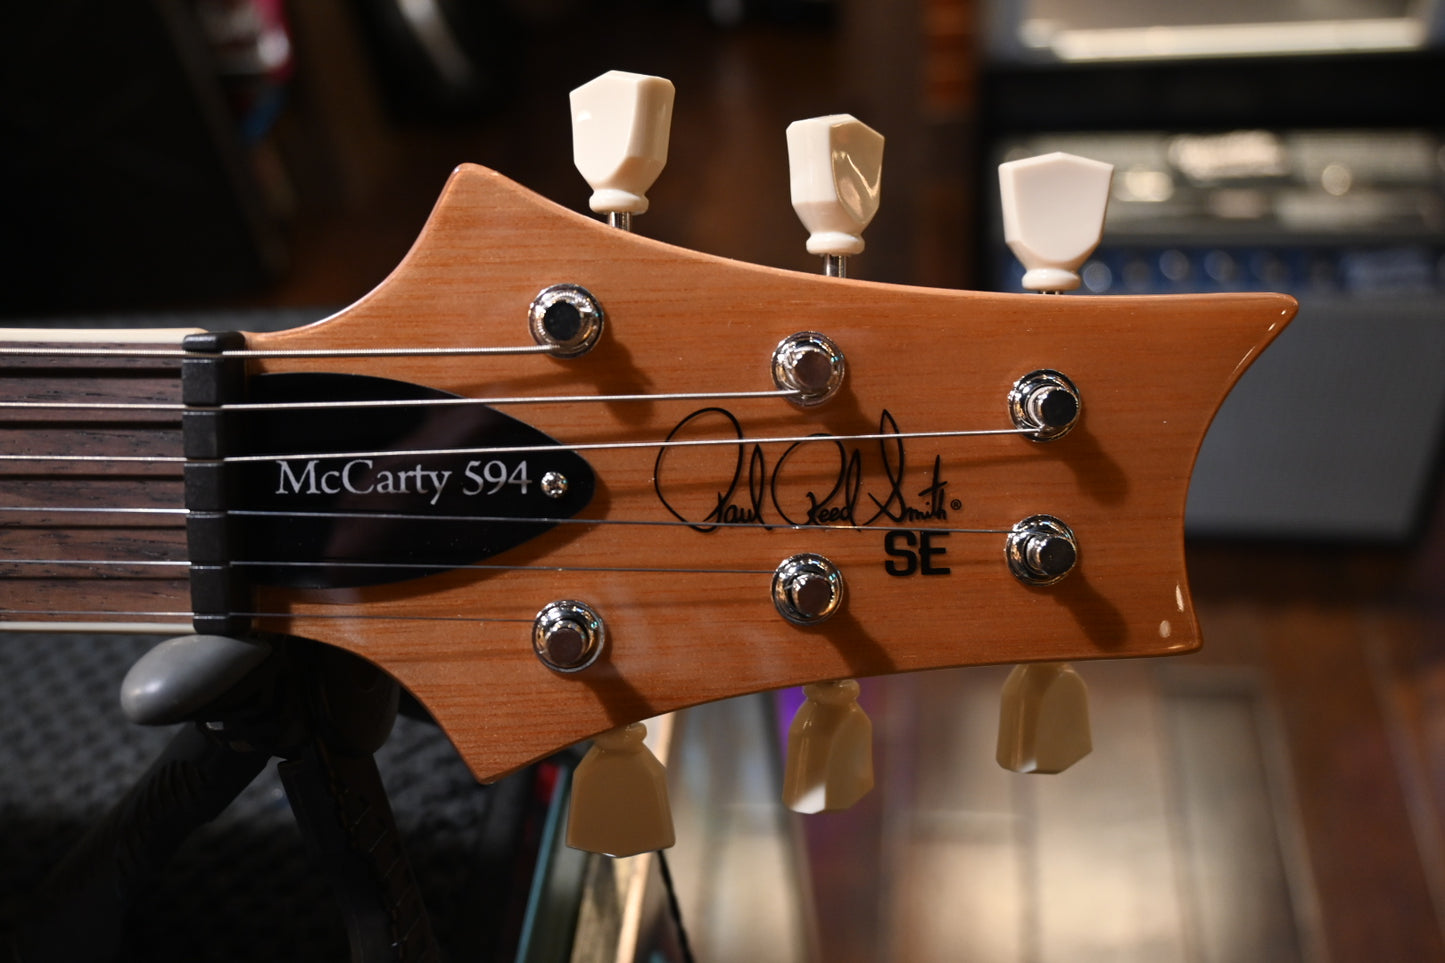 PRS SE McCarty 594 - Charcoal Guitar #6572 - Danville Music